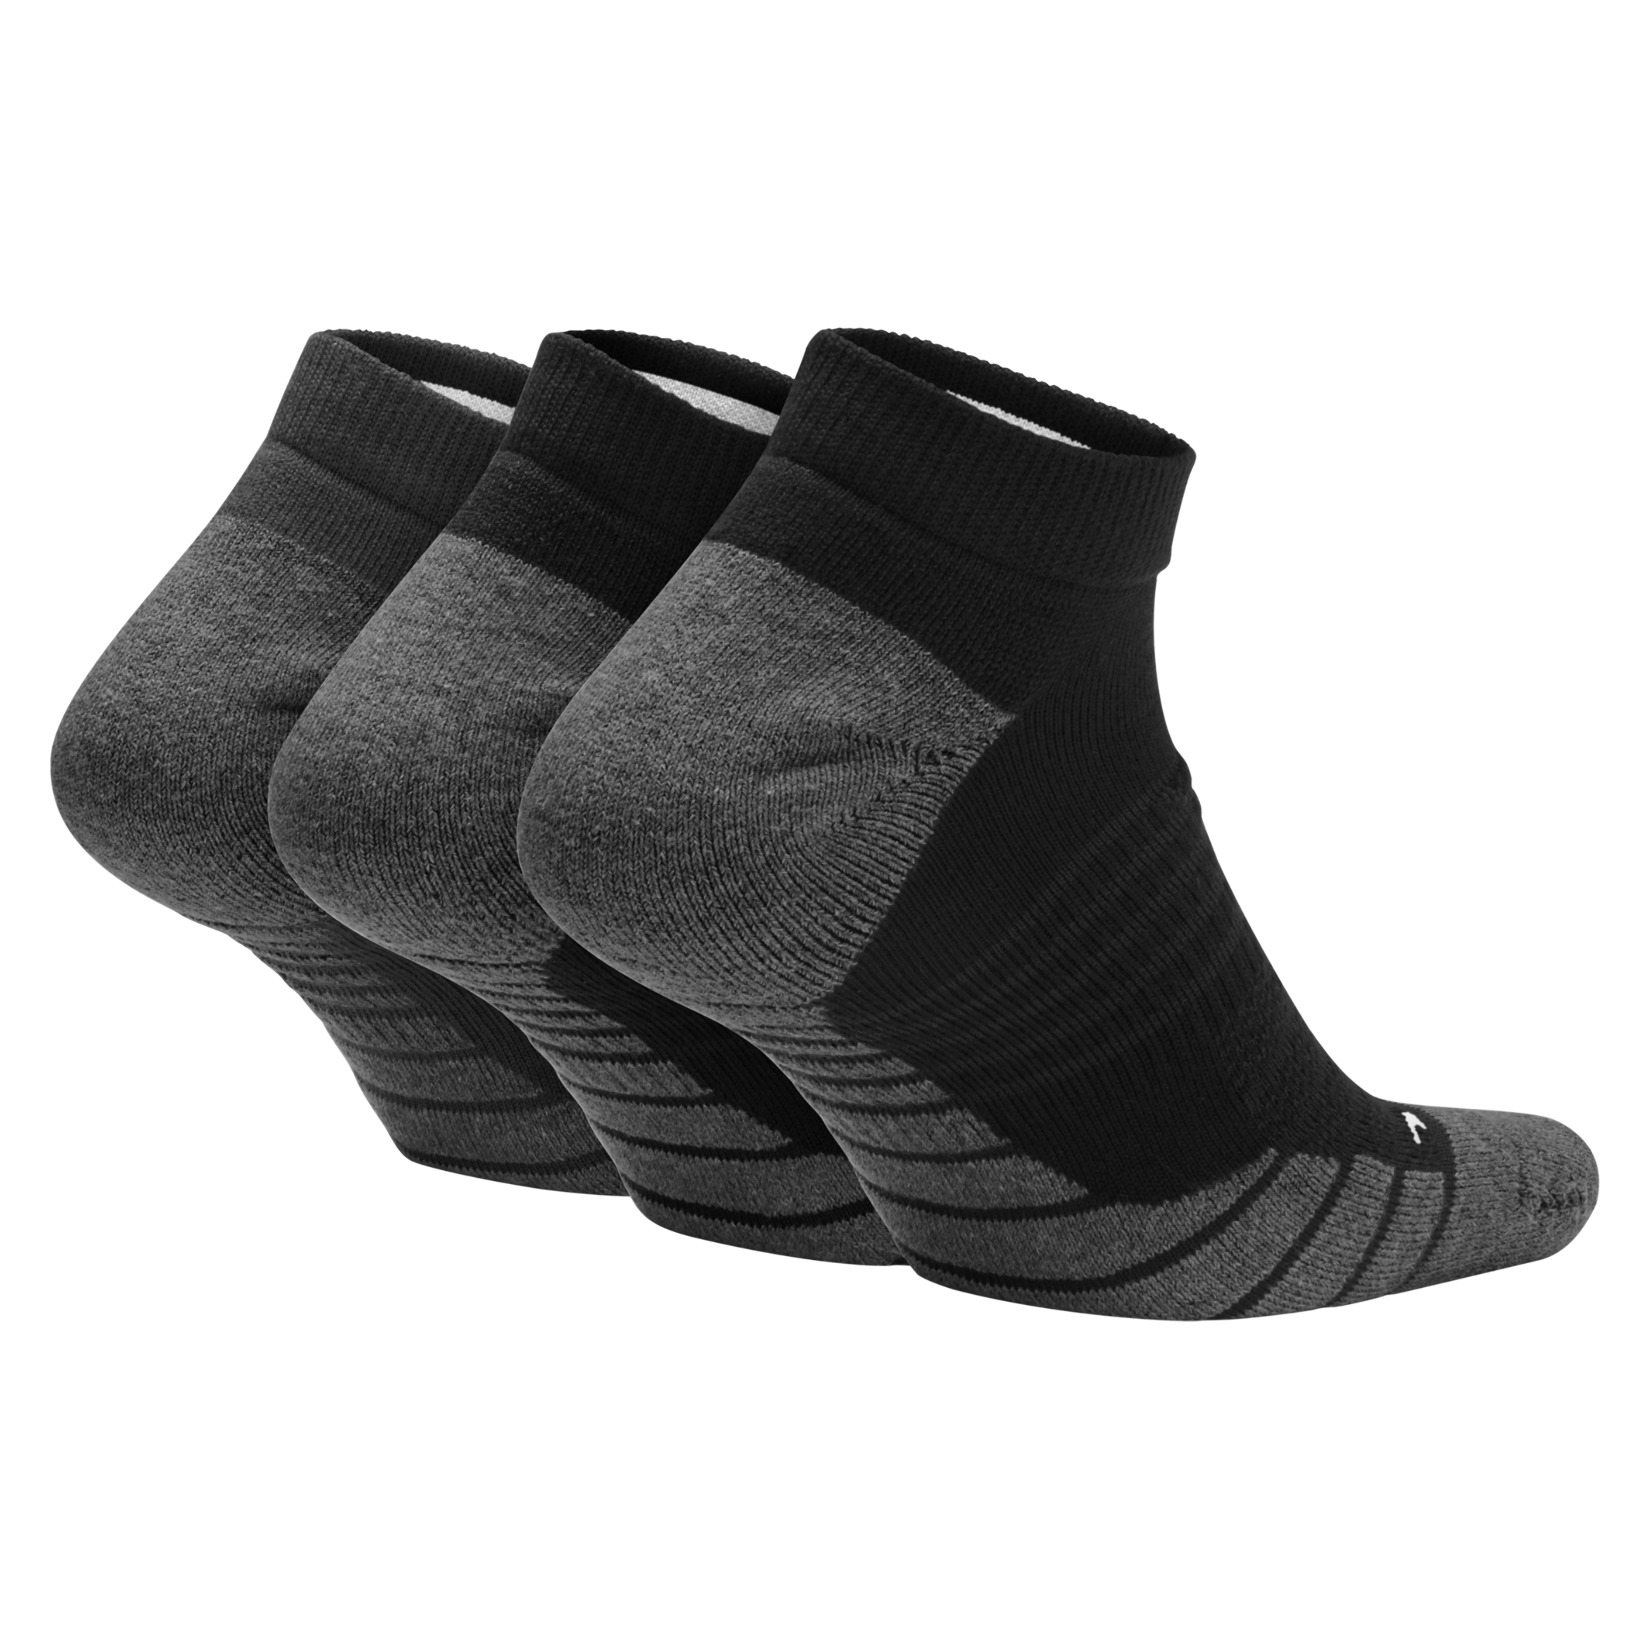 Nike Everyday Max Cushioned Training No-Show Socks (3 Pairs) Black-Anthracite-White